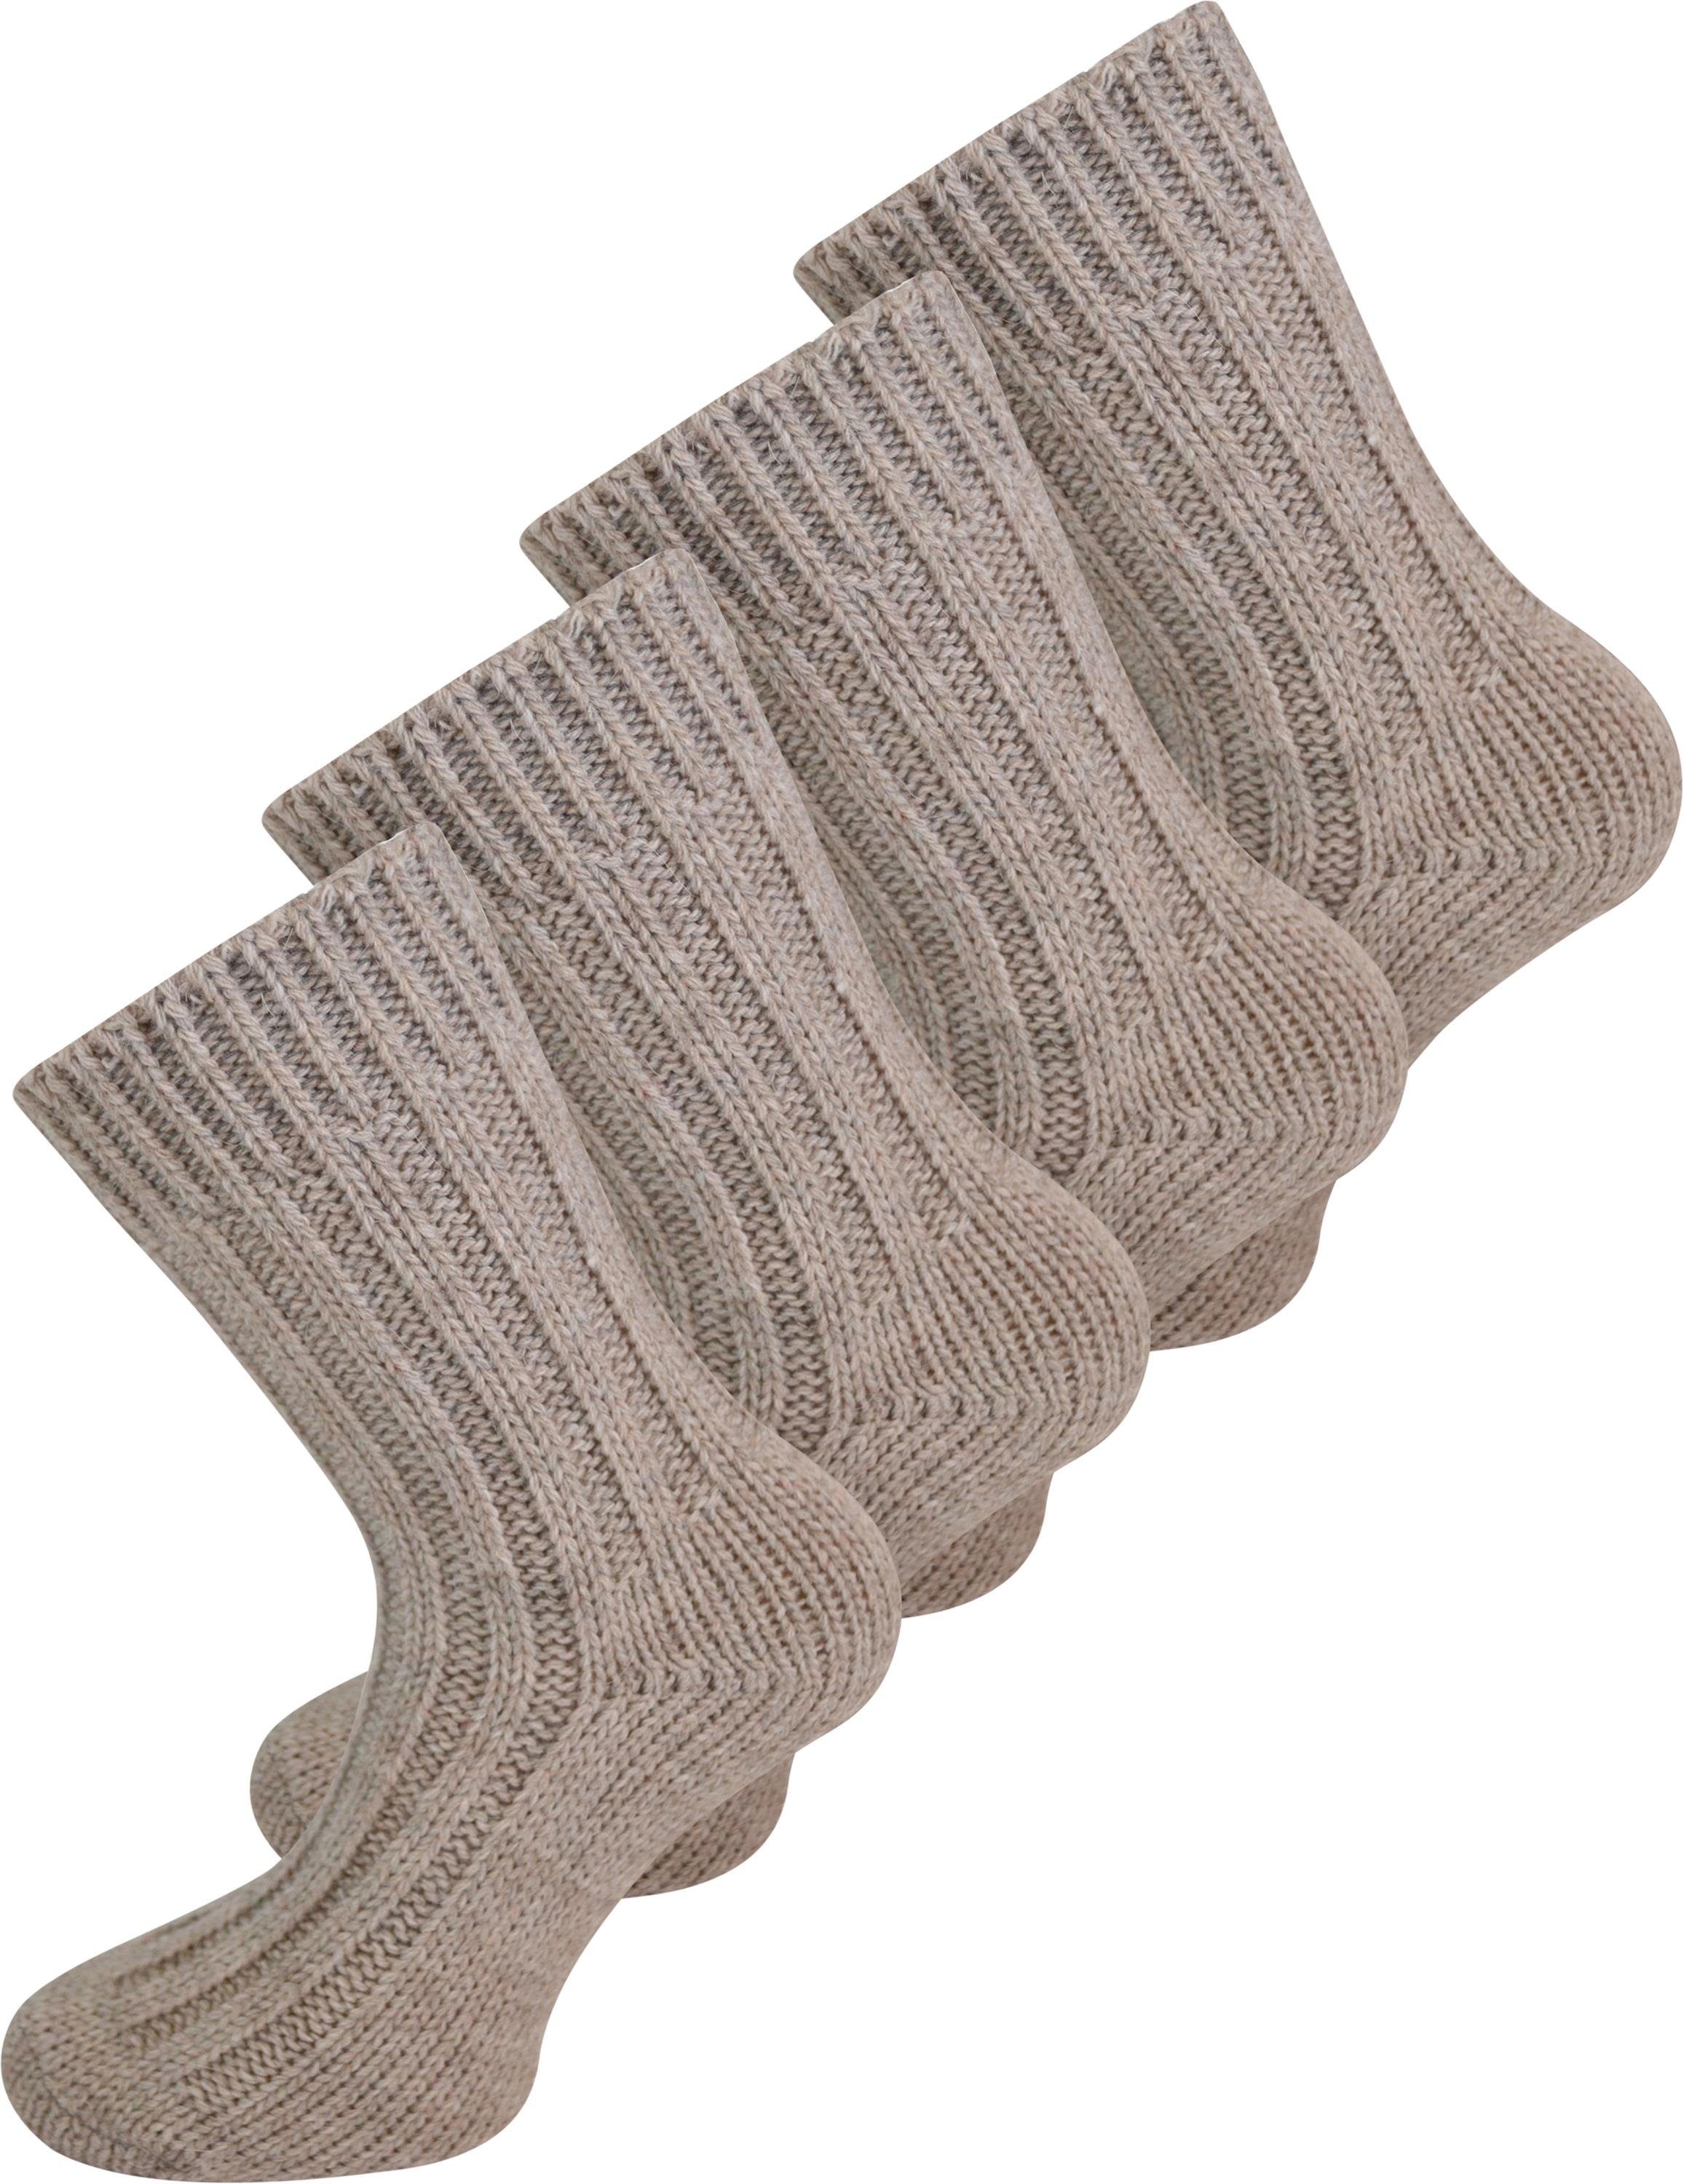 normani Thermosocken 4 Paar Alpaka-Socken (4 Paar) hochwertige Alpaka-Wolle Beige